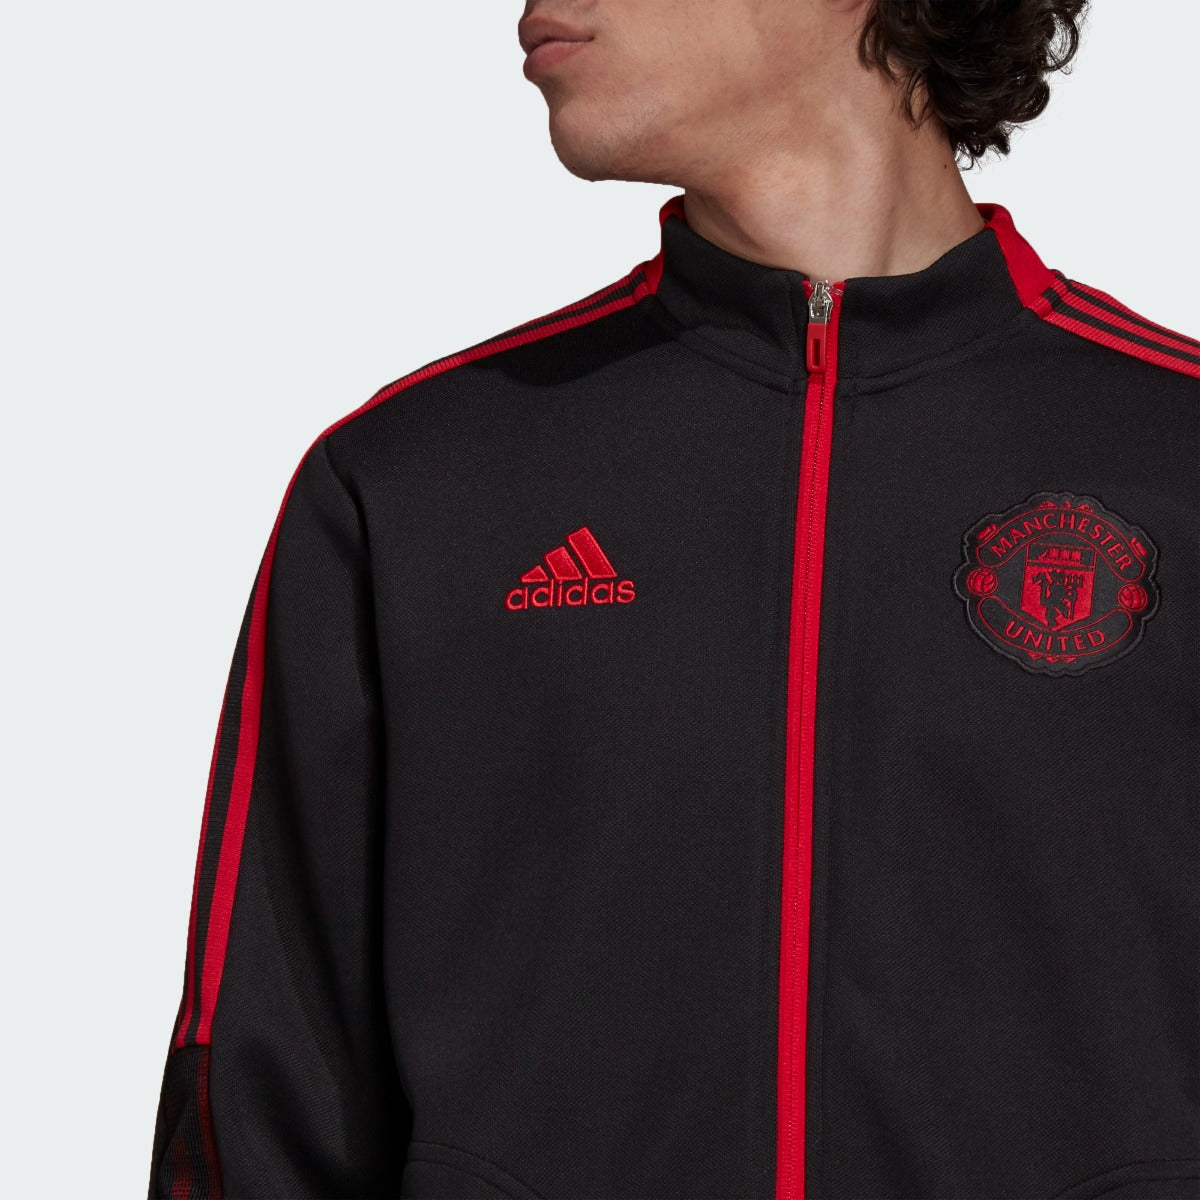 Adidas 2021-22 Manchester United Anthem Jacket - Black-Red (Detail 1)